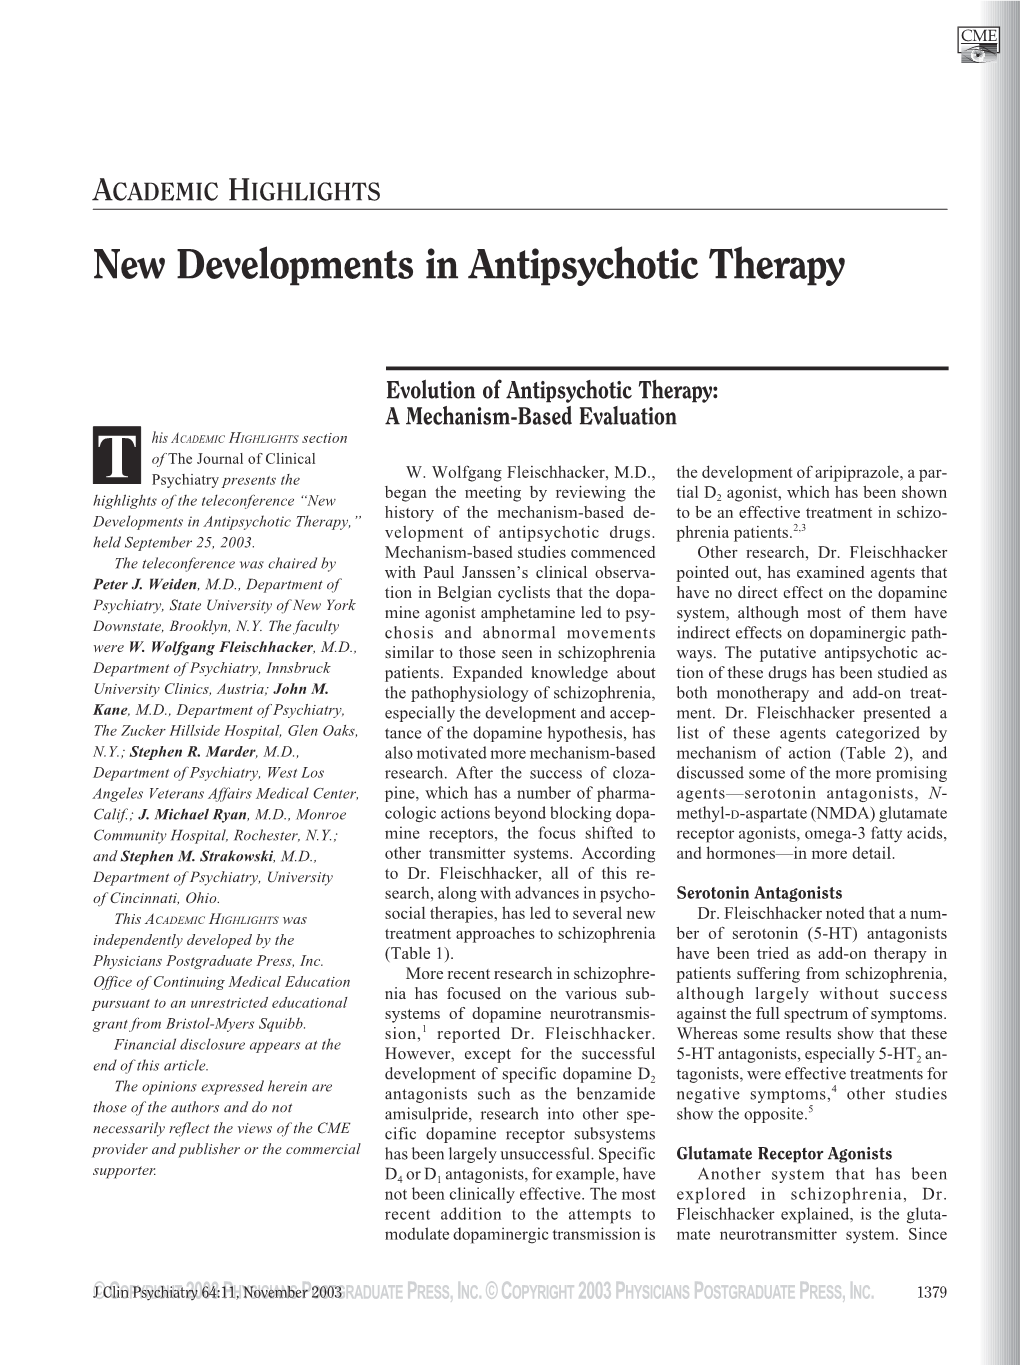 New Developments in Antipsychotic Therapy